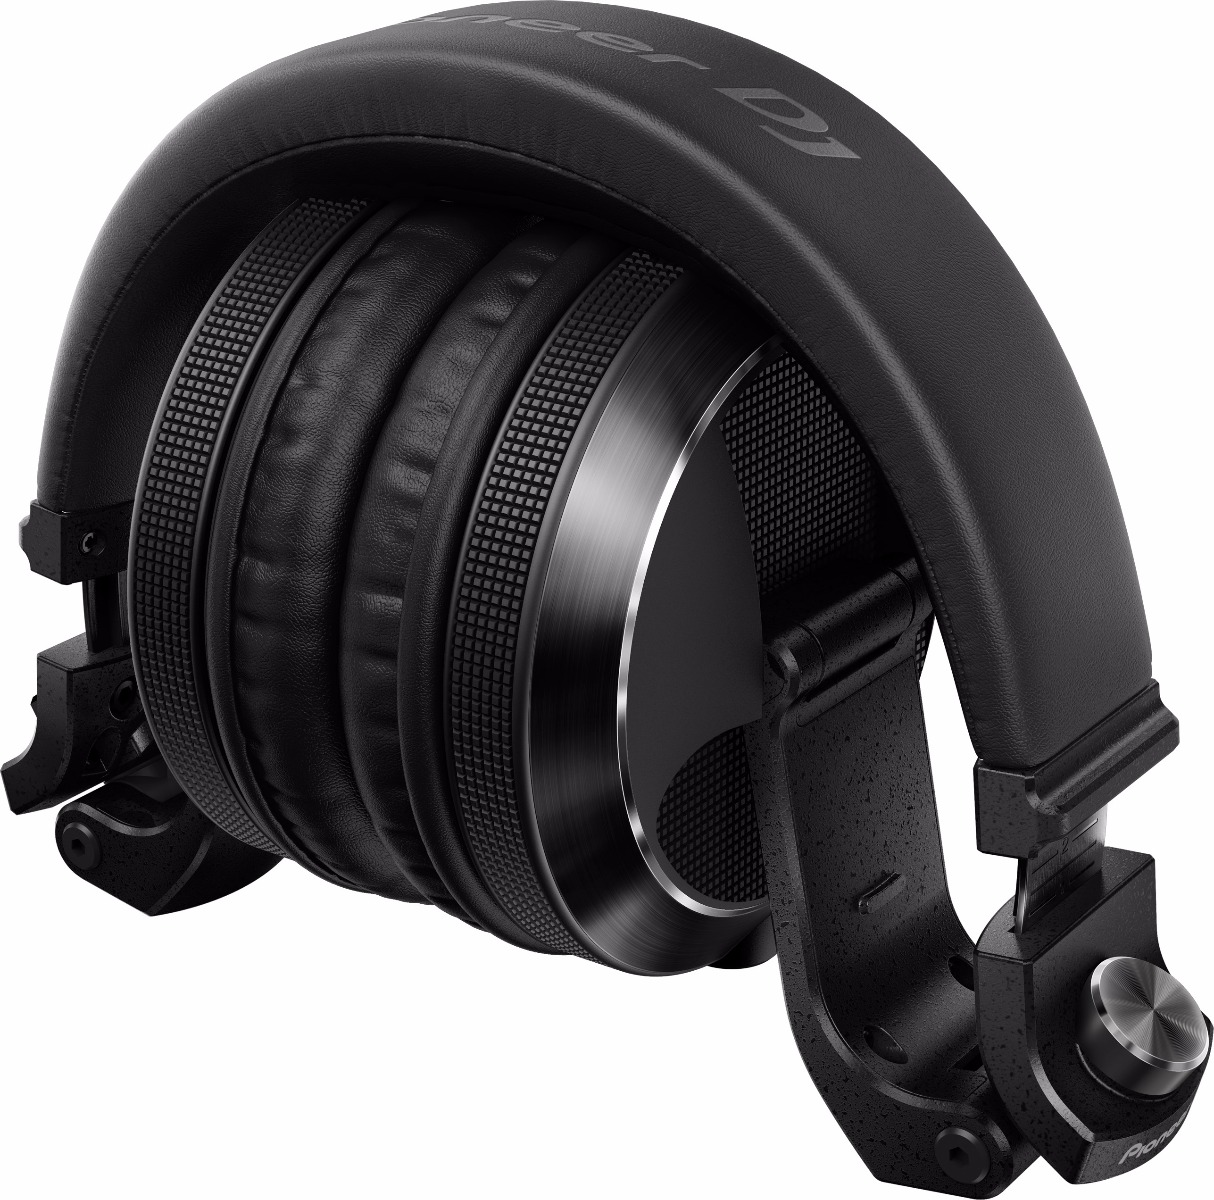 Pioneer HDJ-X7 - Professional DJ headphones